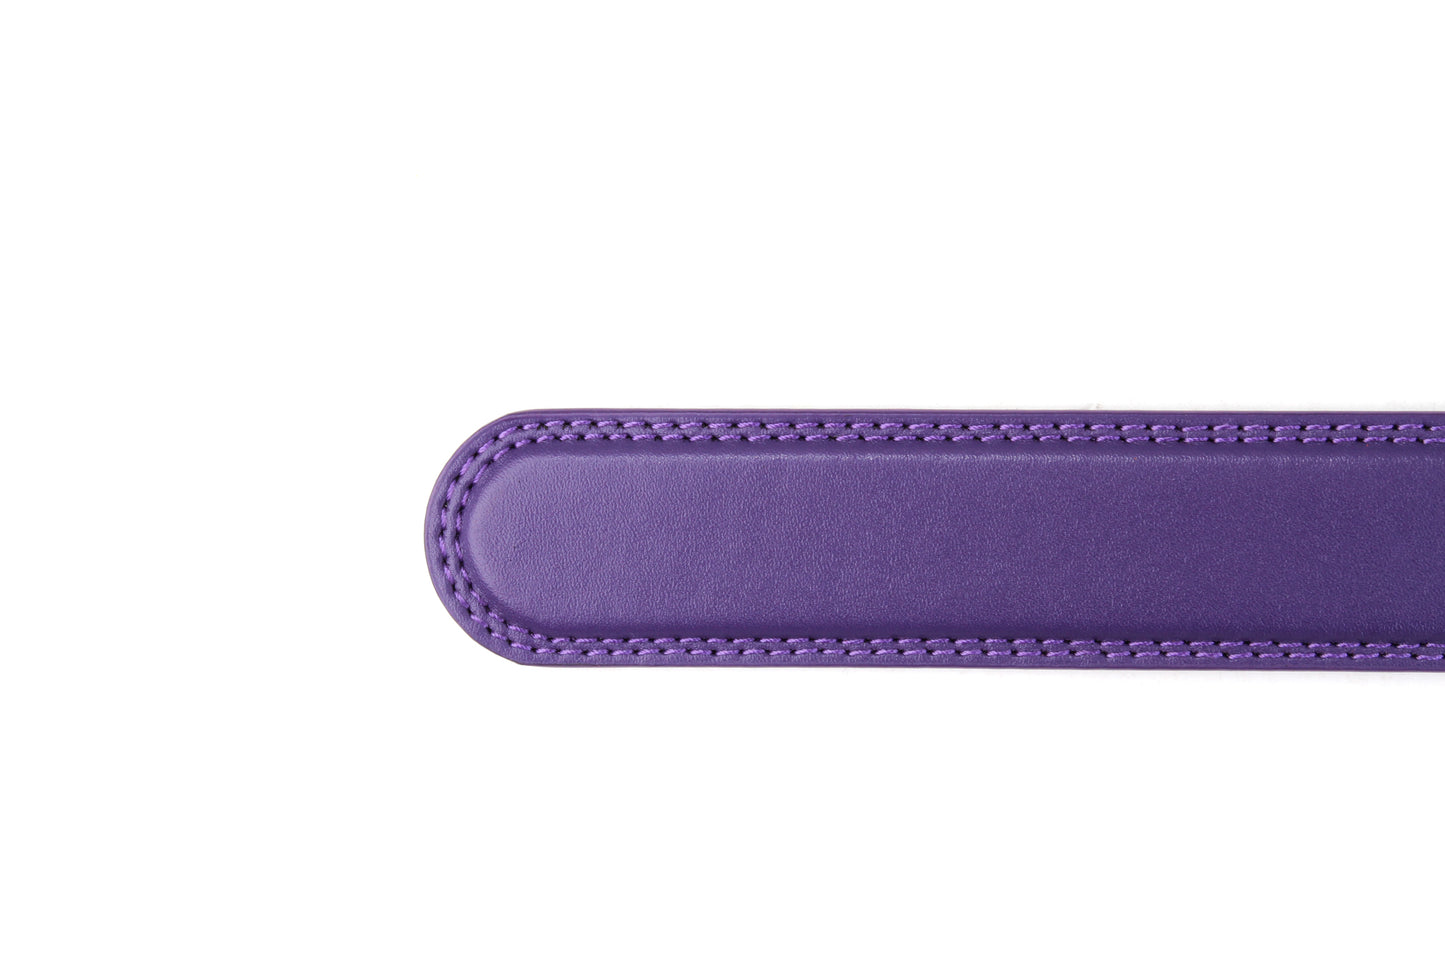 Men's vegan microfiber belt strap in purple with a 1.25-inch width, formal look, tip of the strap